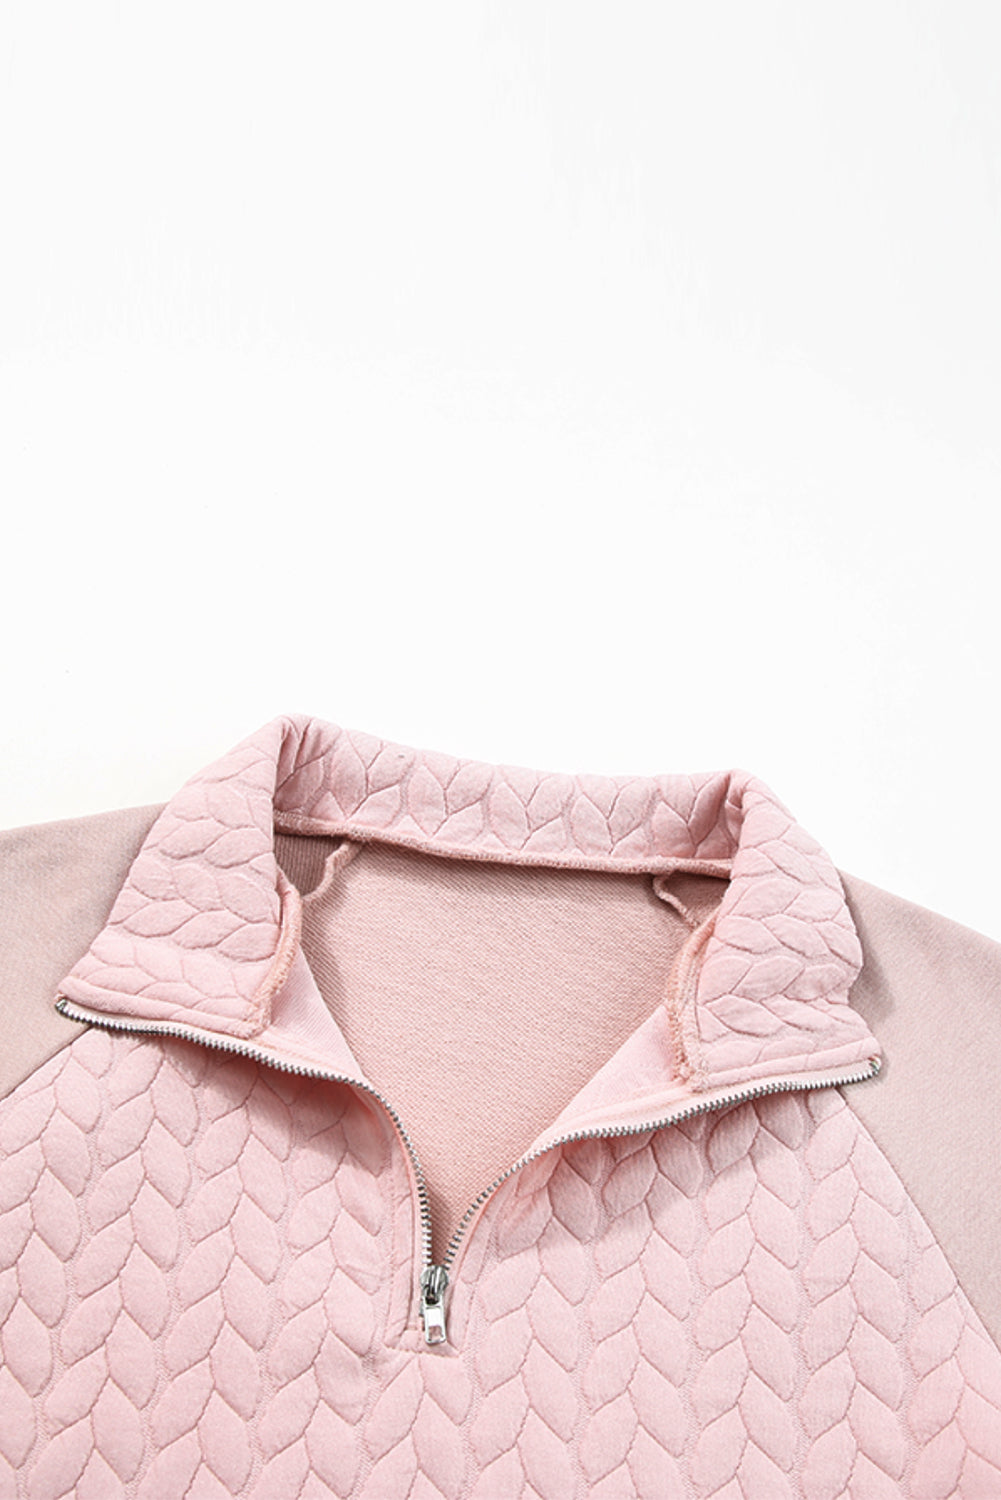 Pale Chestnut Textured Quarter Zip Raglan Sleeve Sweatshirt - SELFTRITSS